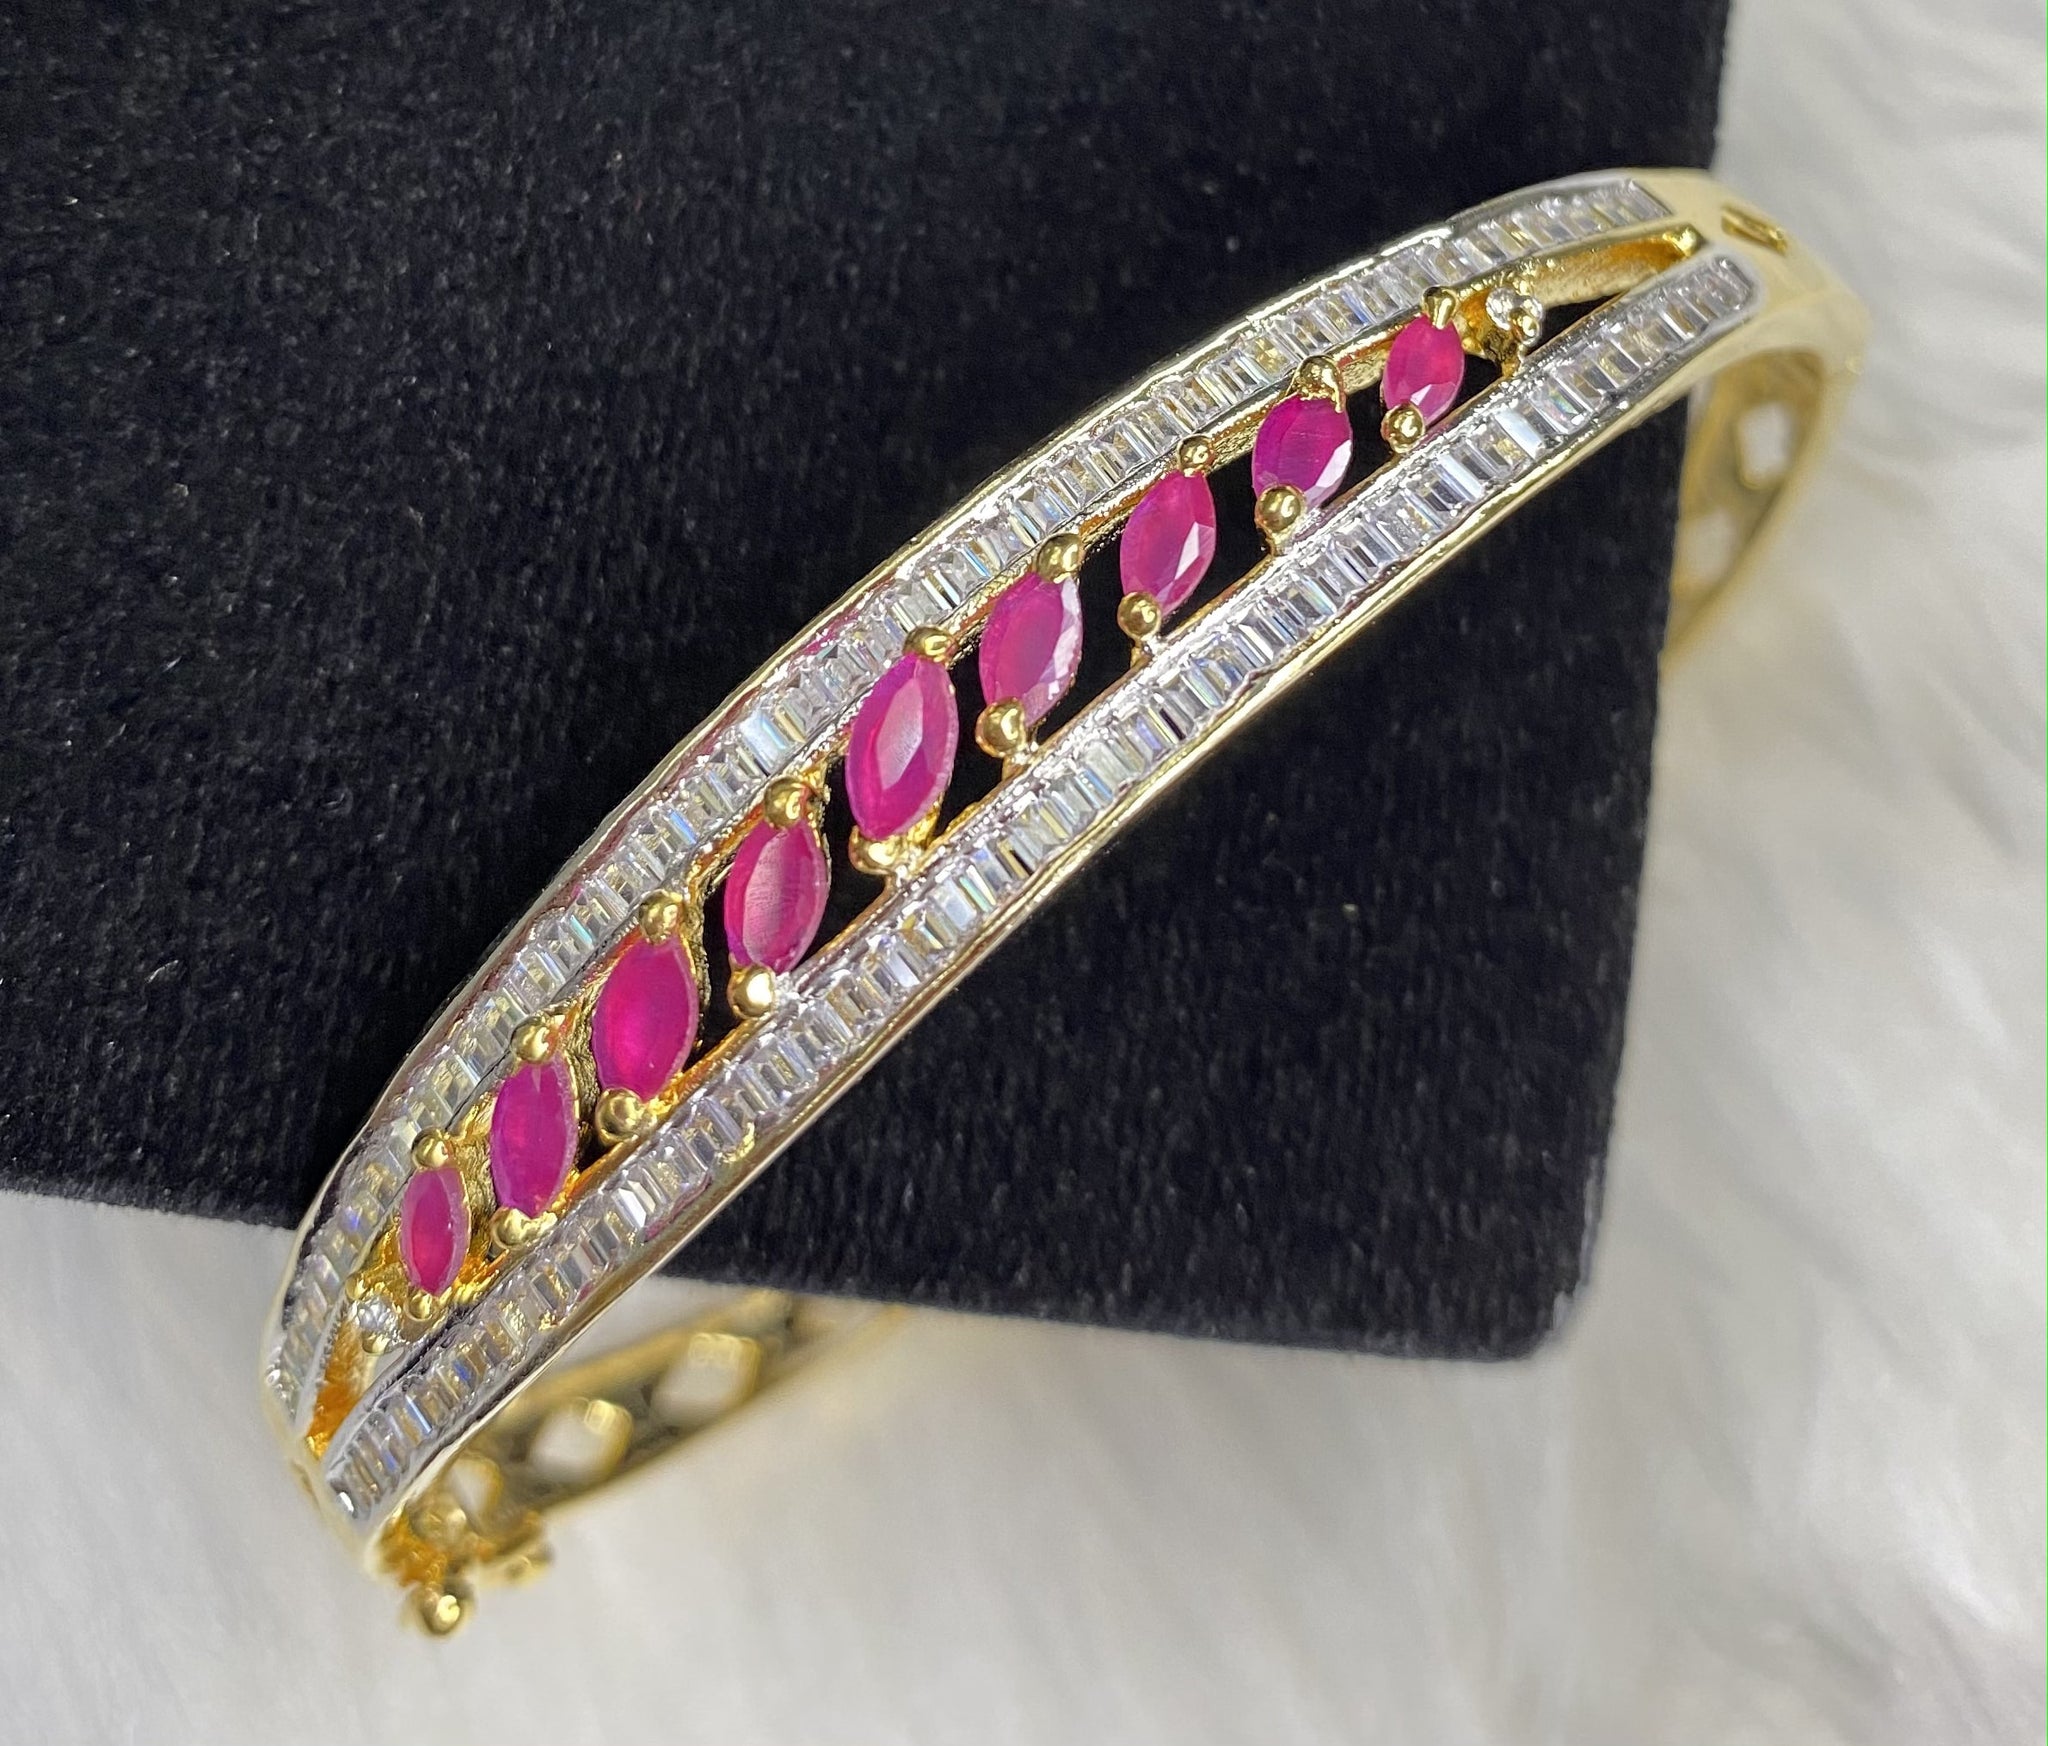 Stone Ruby Jade Bracelet at Rs 600/piece in Jaipur | ID: 2850226531188